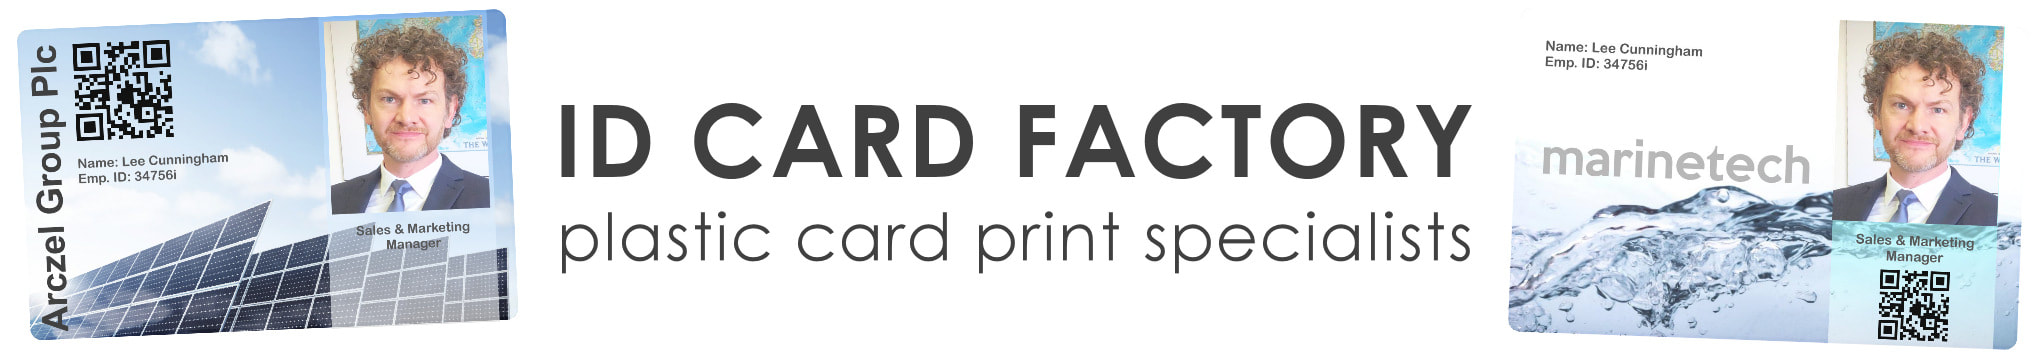 Sale ID card printing | staff photo ID cards | company employee ID card print service | Local Identity Card Printing | Custom Design 